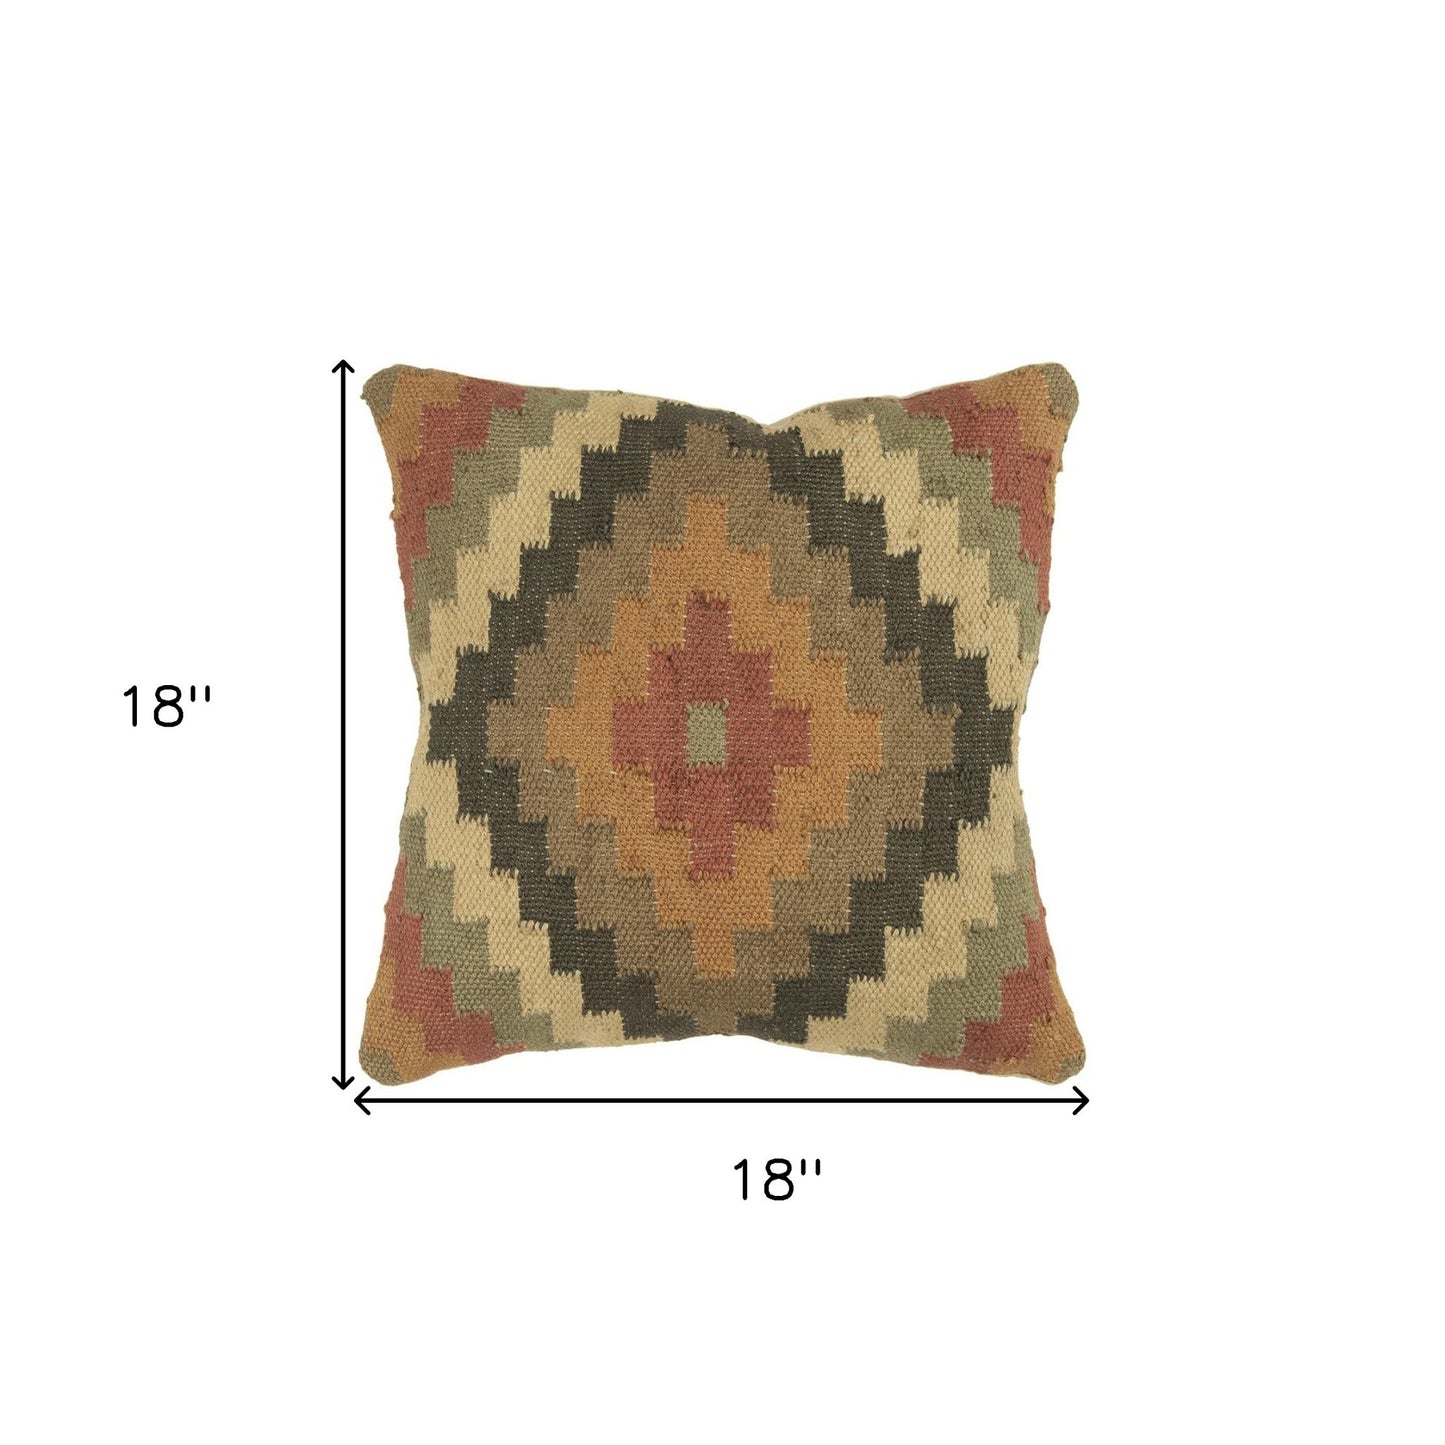 18" Brown and Green Geometric Jute Wool Blend Throw Pillow